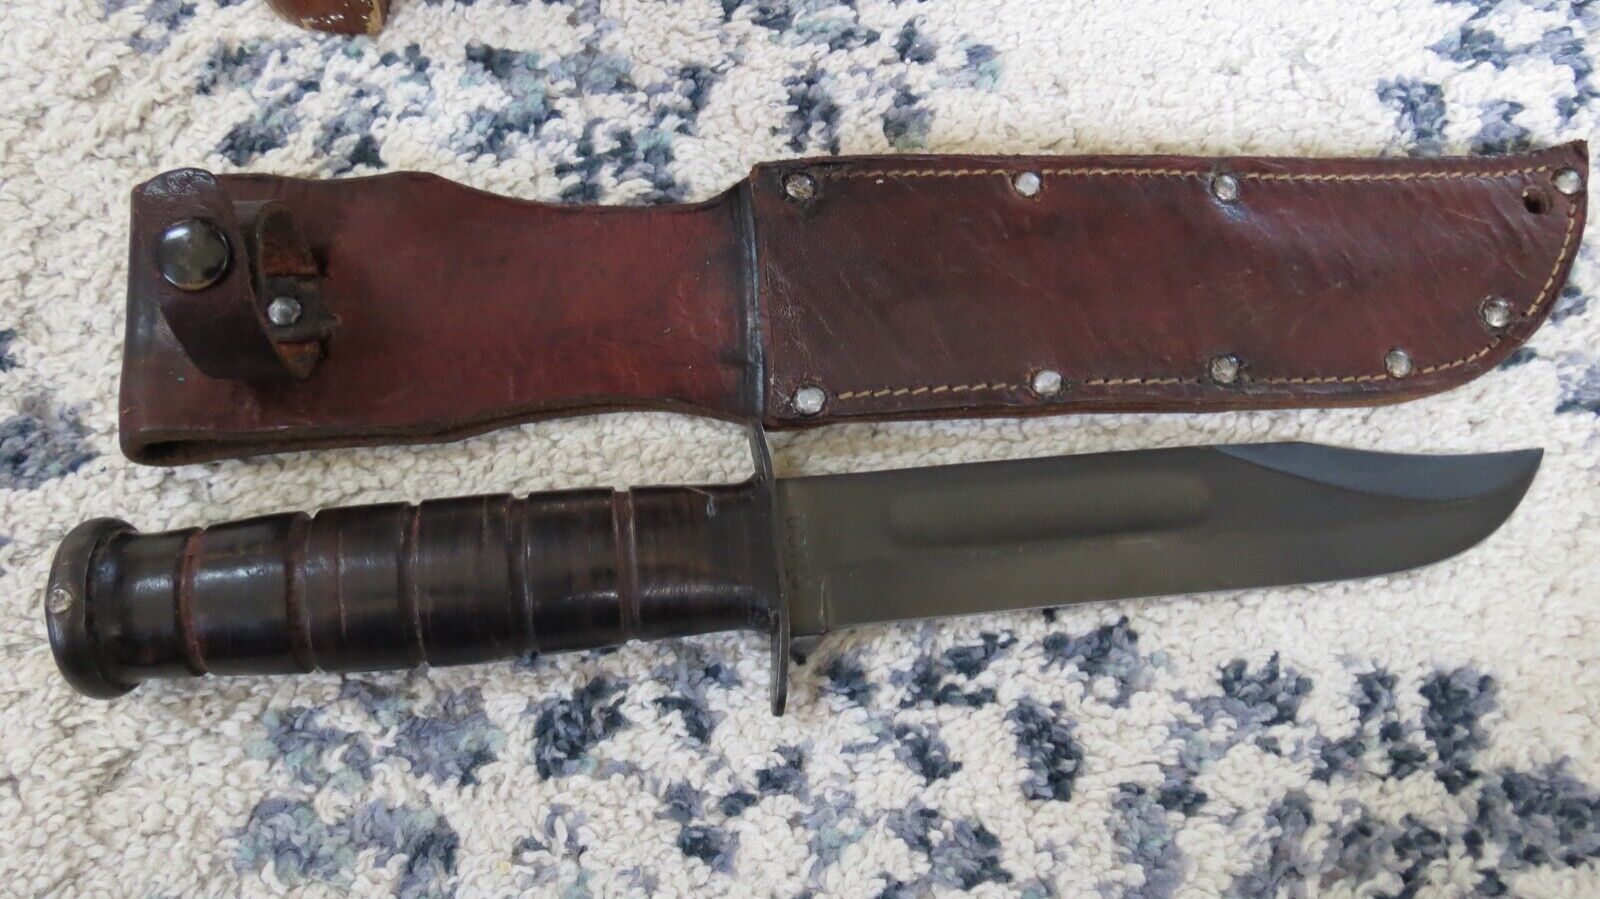 KA-BAR USMC fighting knife pinned pummel (lot#18754)